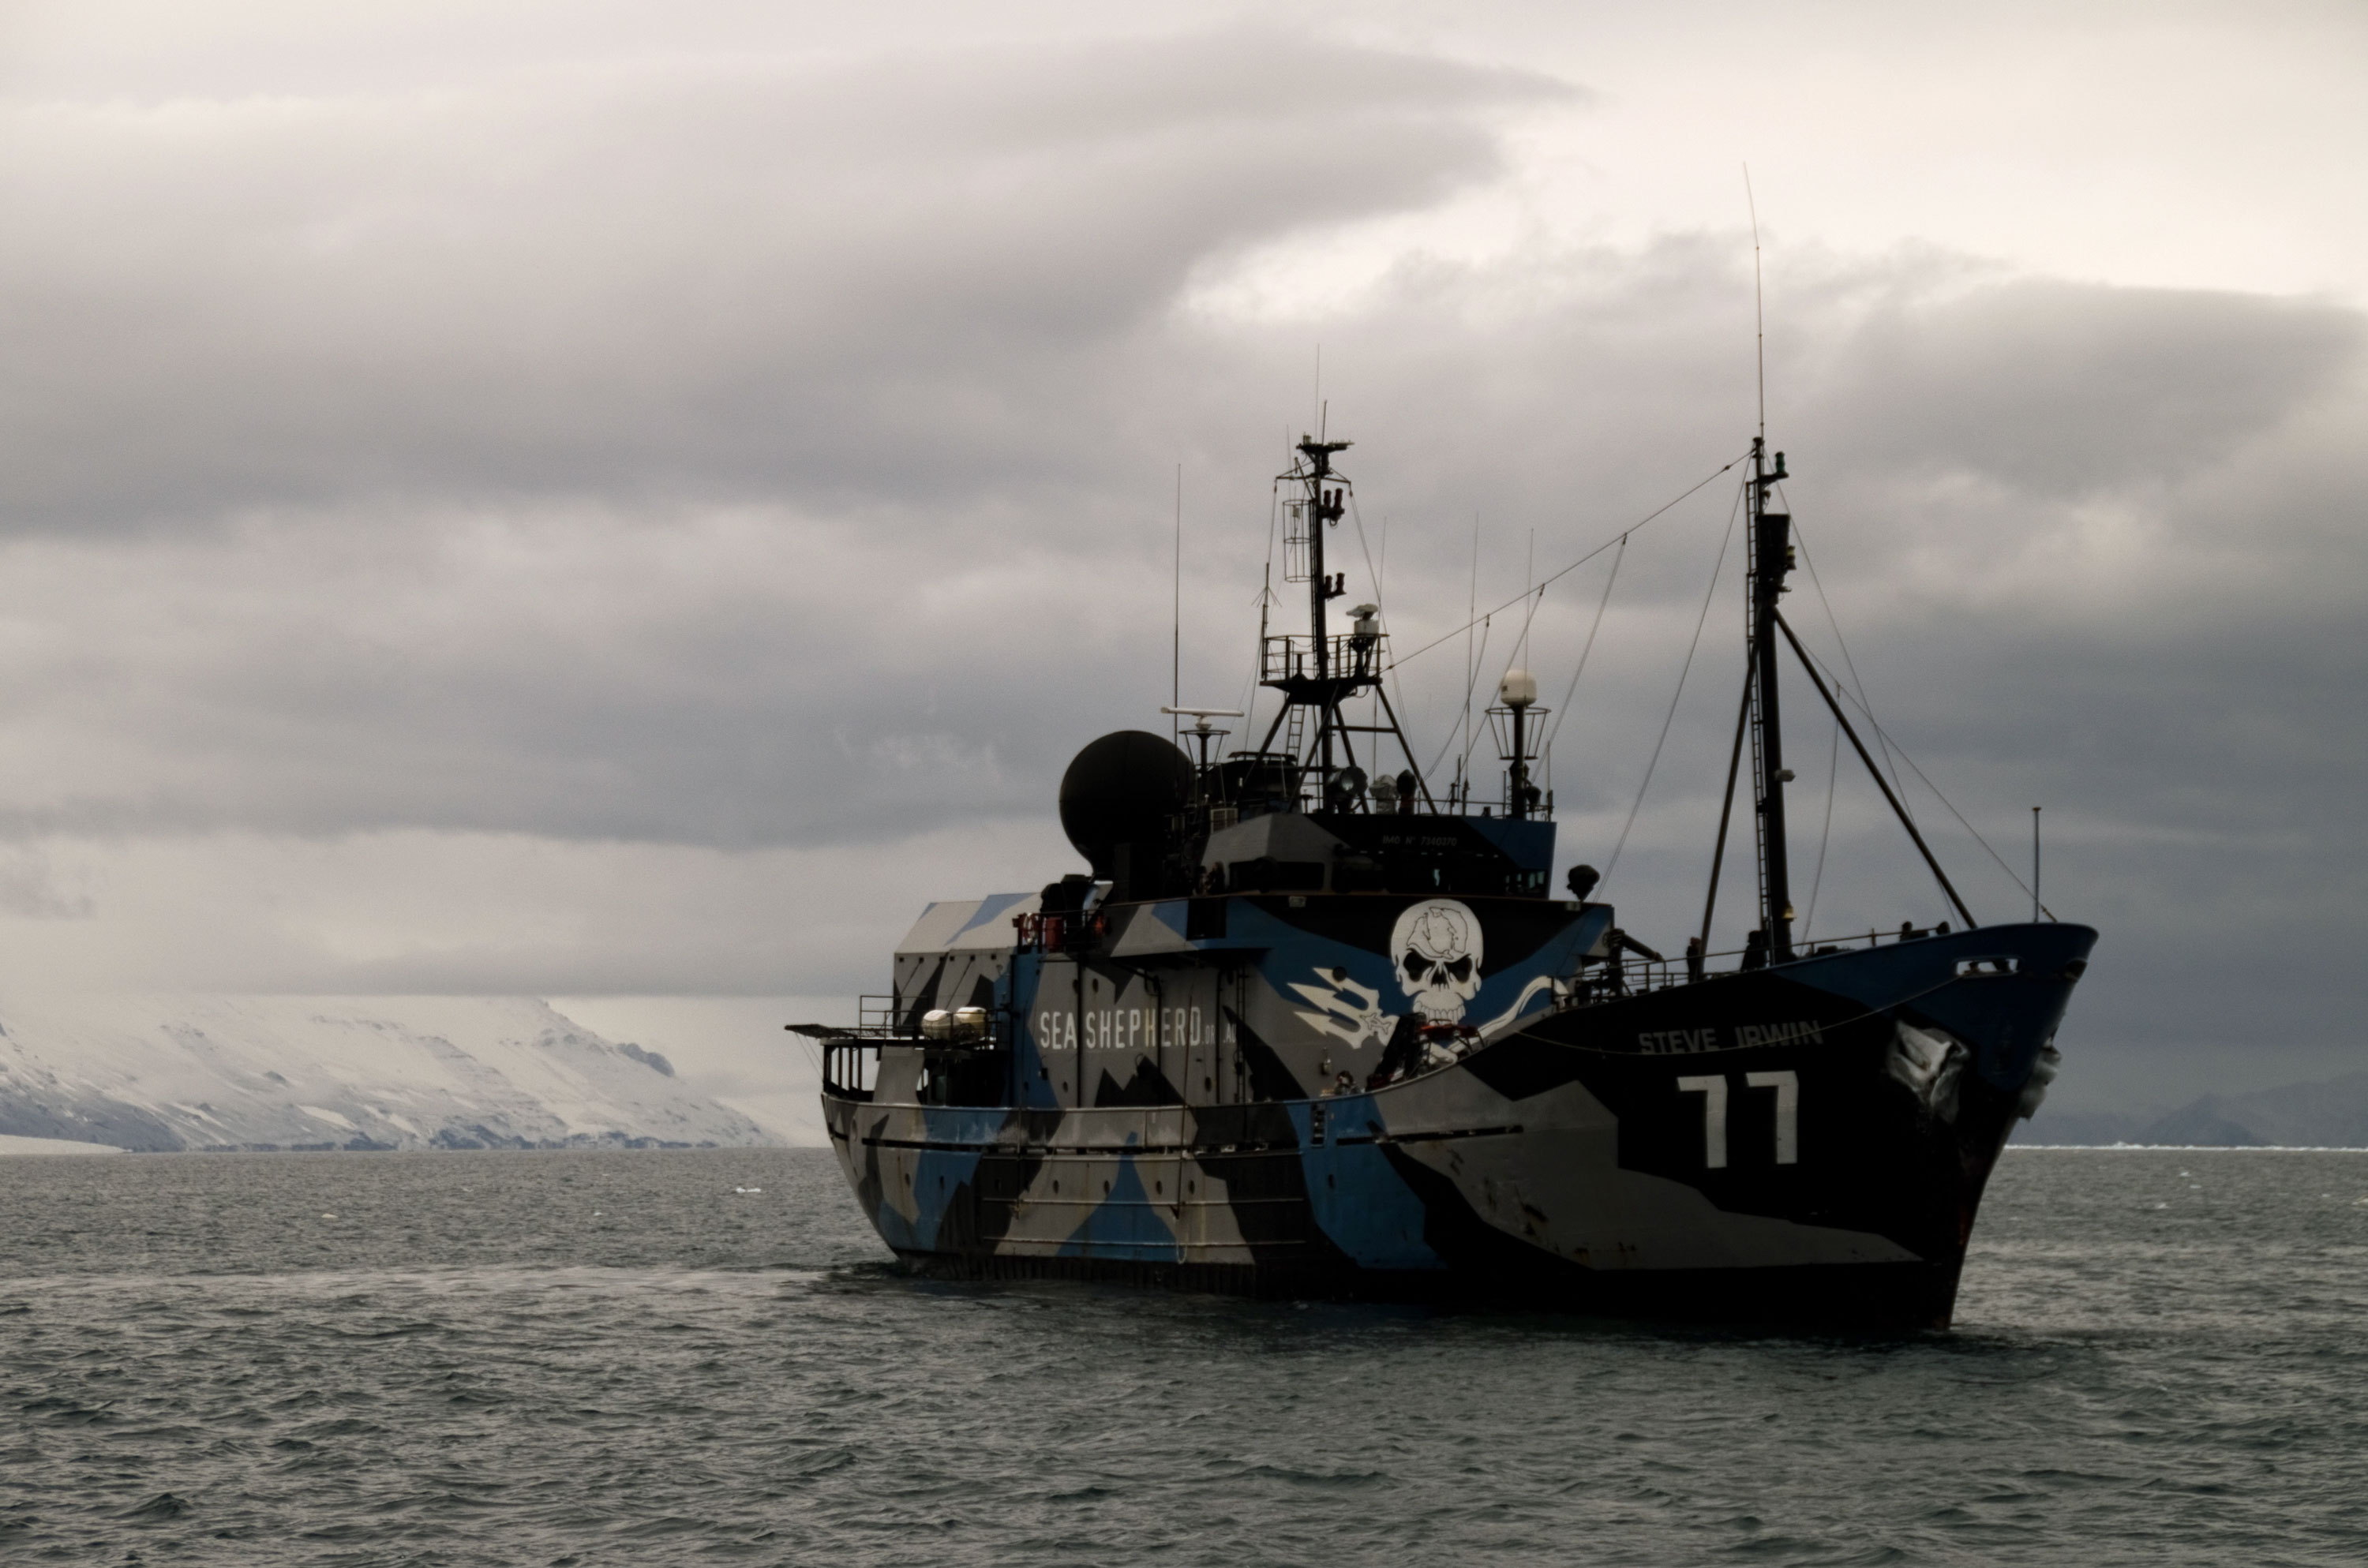 The Sea Shepherd vessel. Photo: Nico Edwards